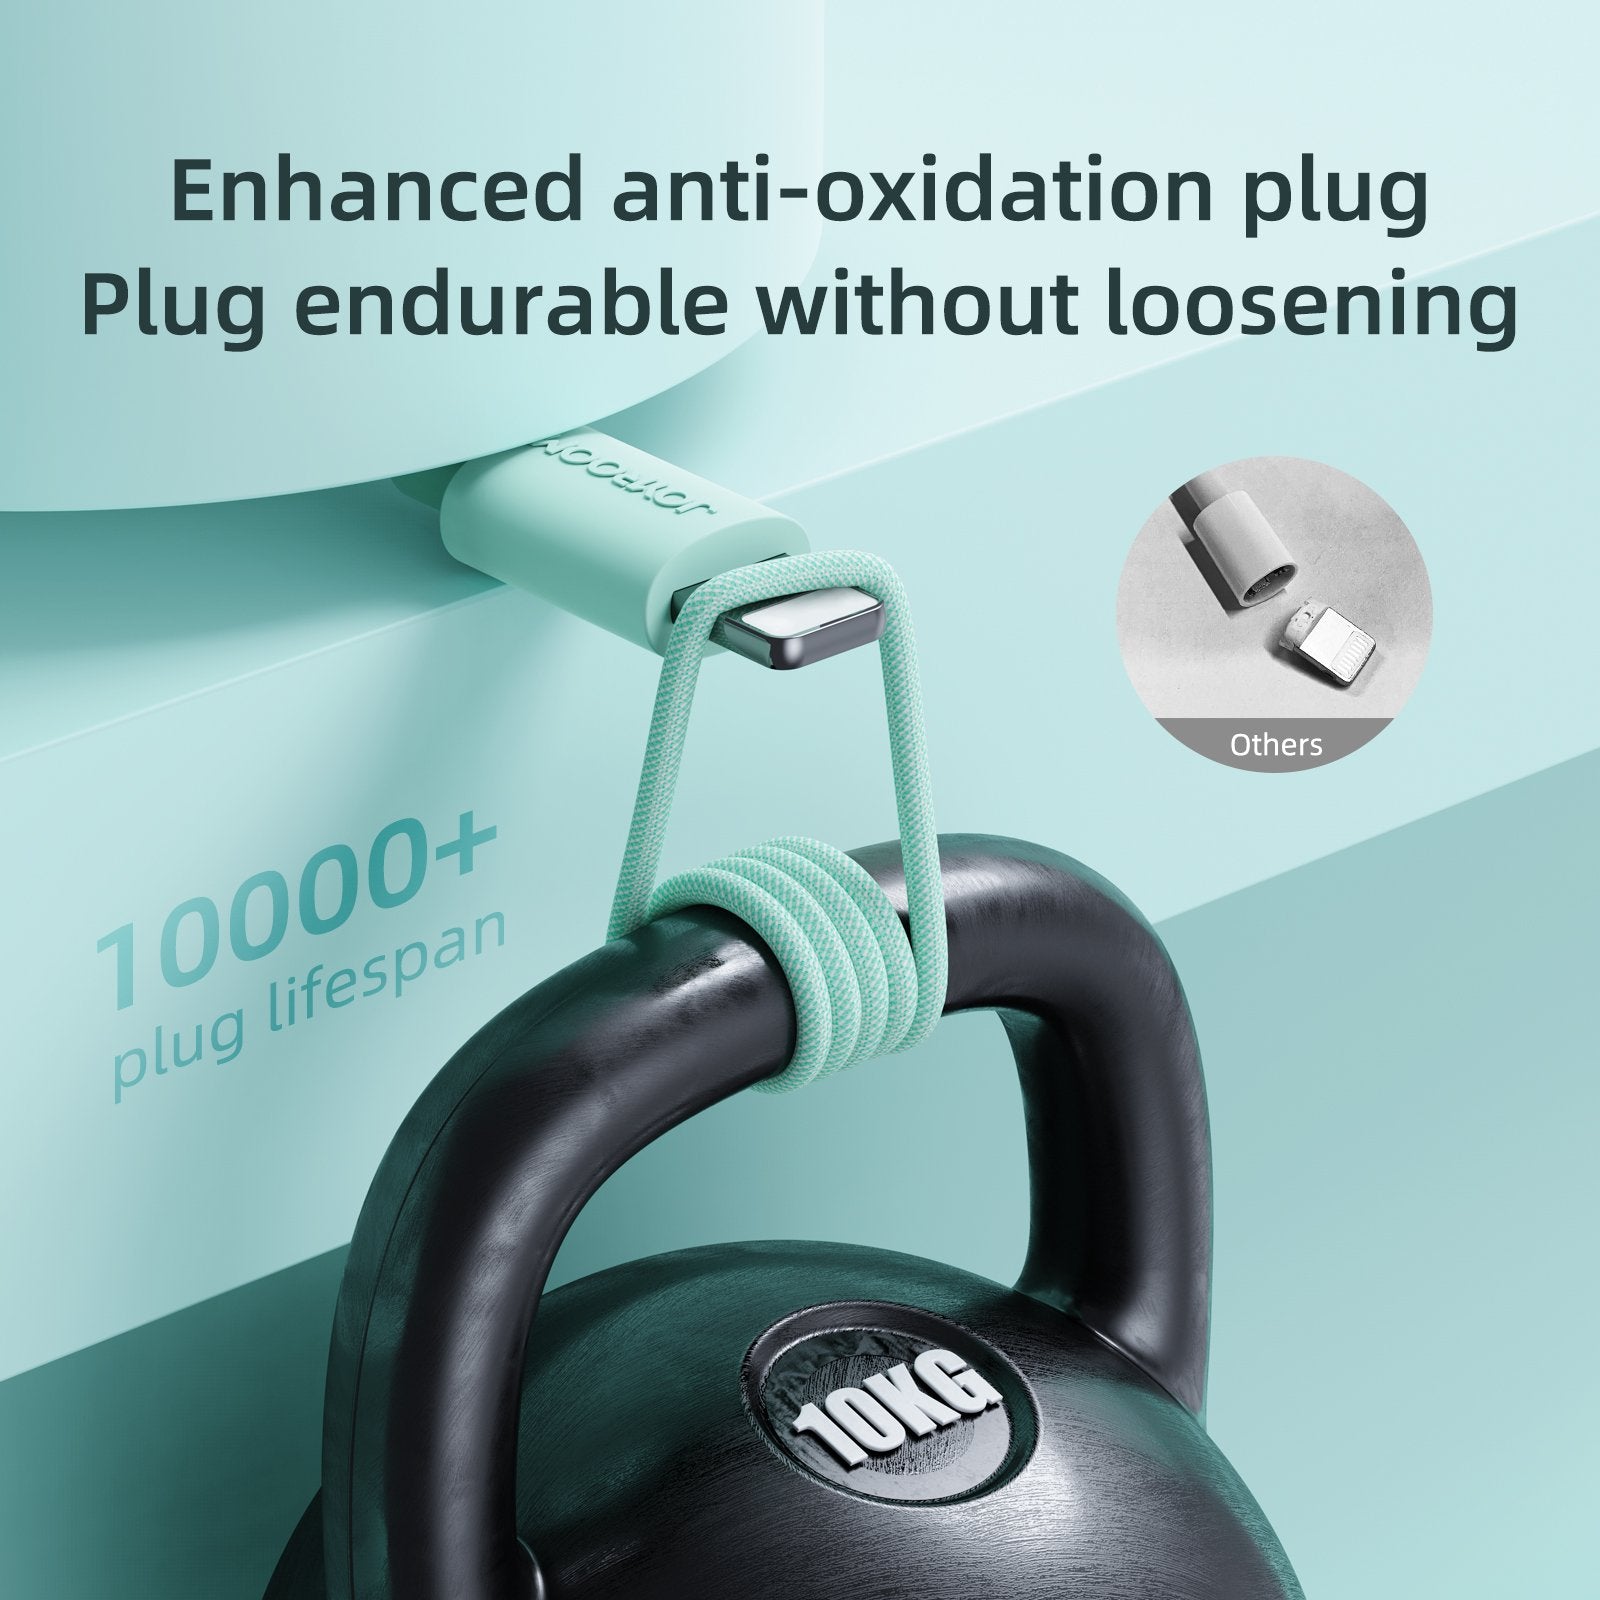 Enhanced anti-oxidation plug